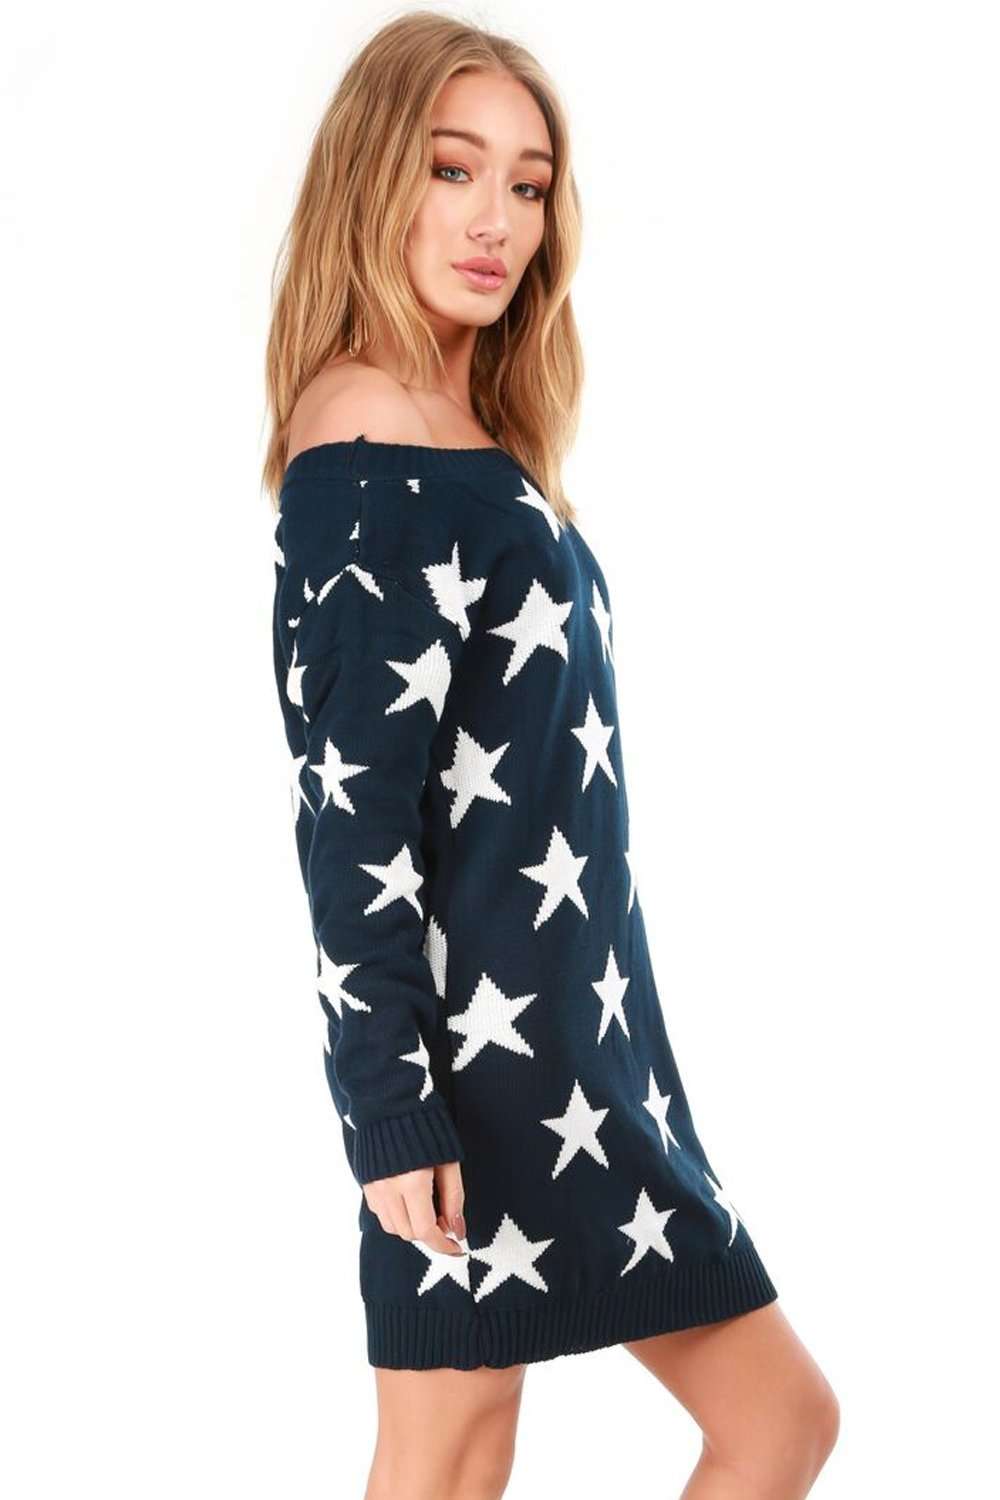 Ellia Bardot Star Print Knitted Jumper Dress - bejealous-com